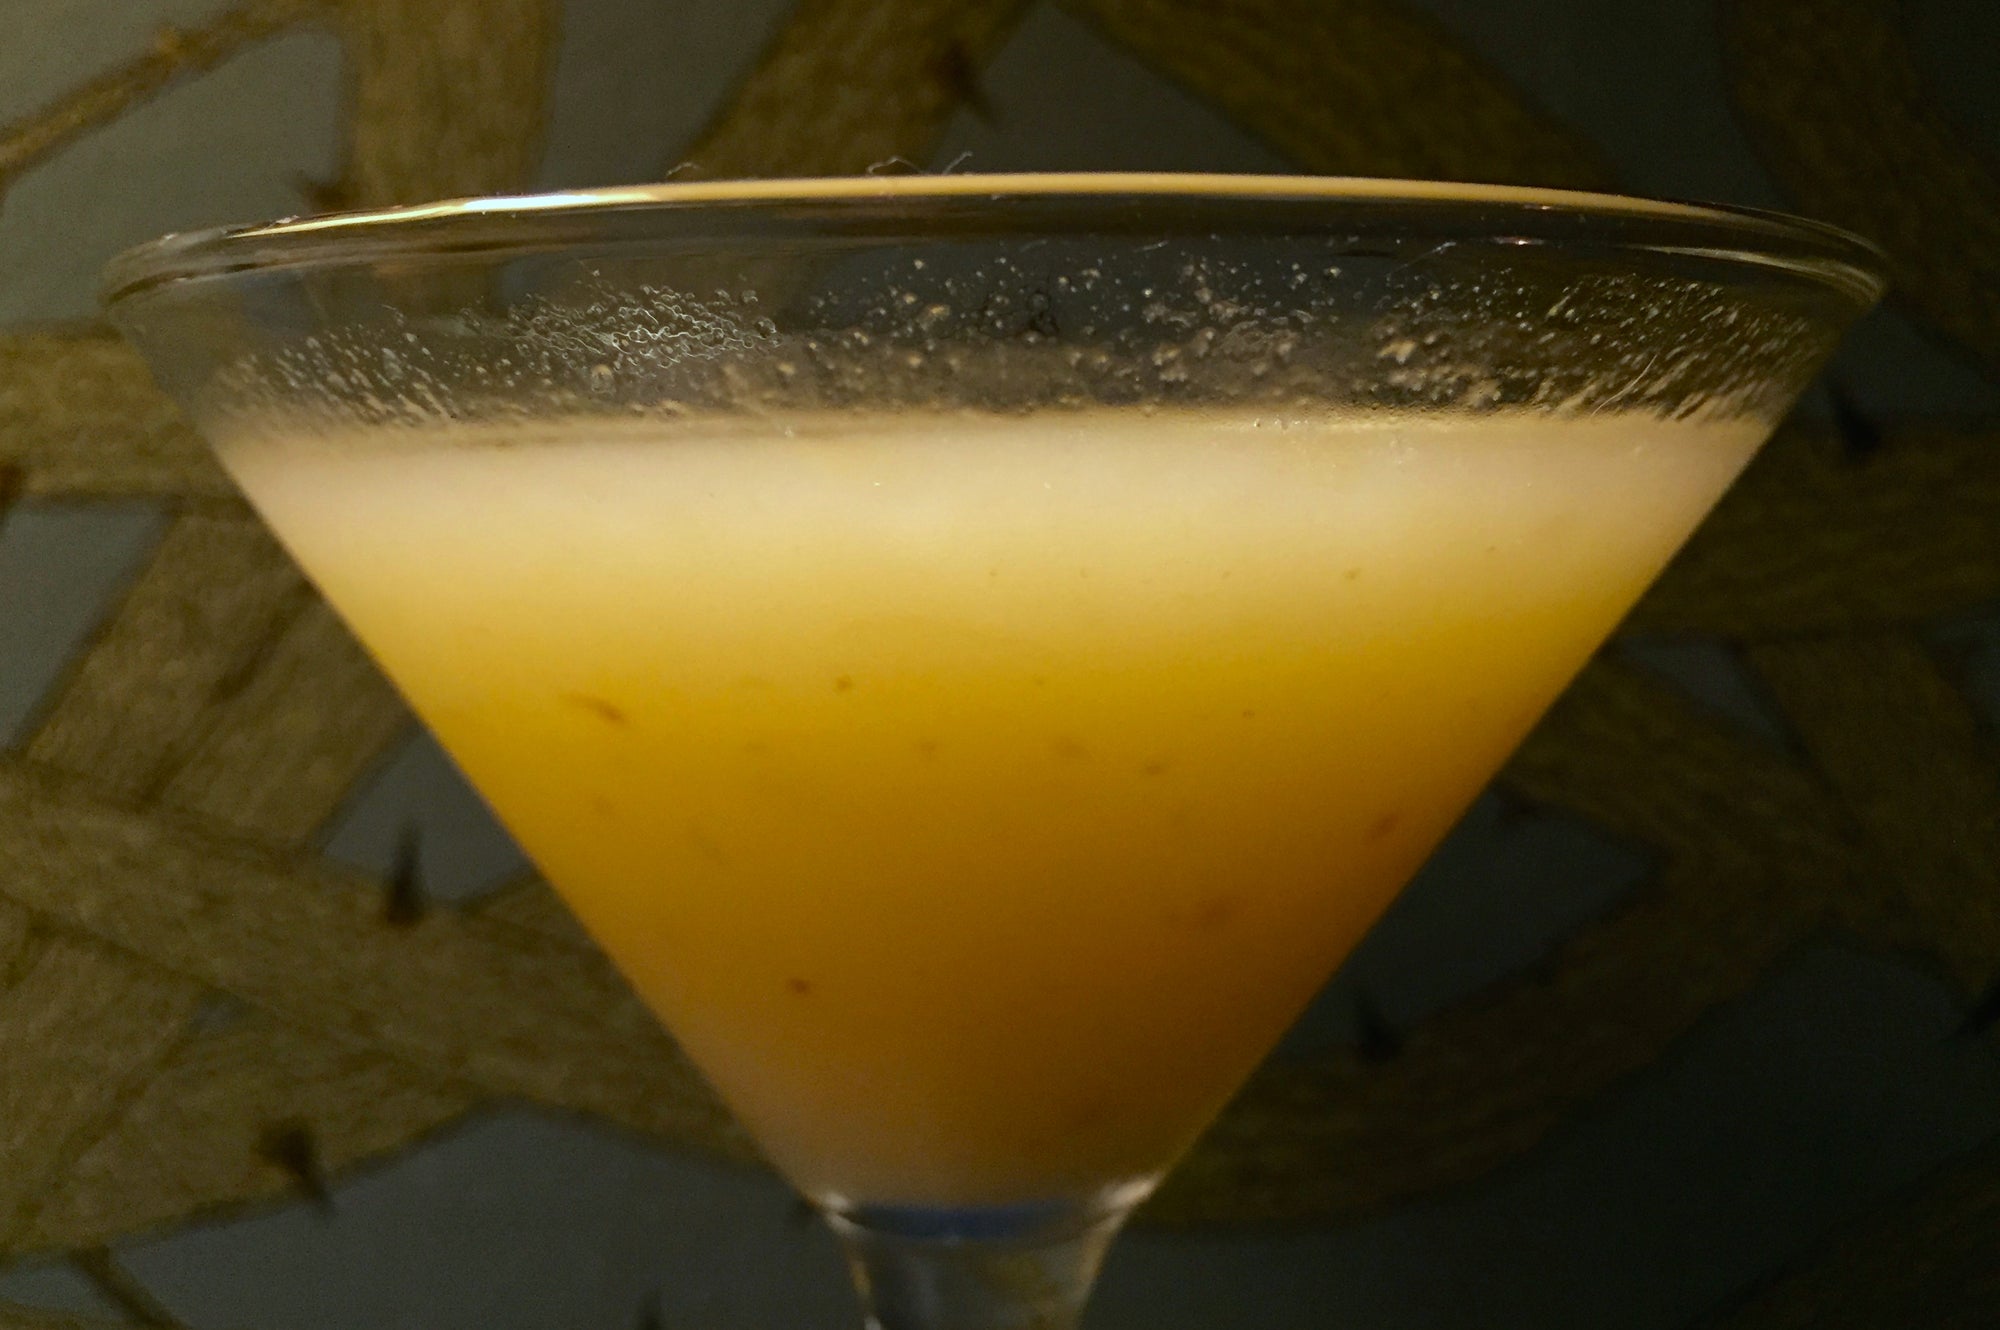 The Appalachian Martini